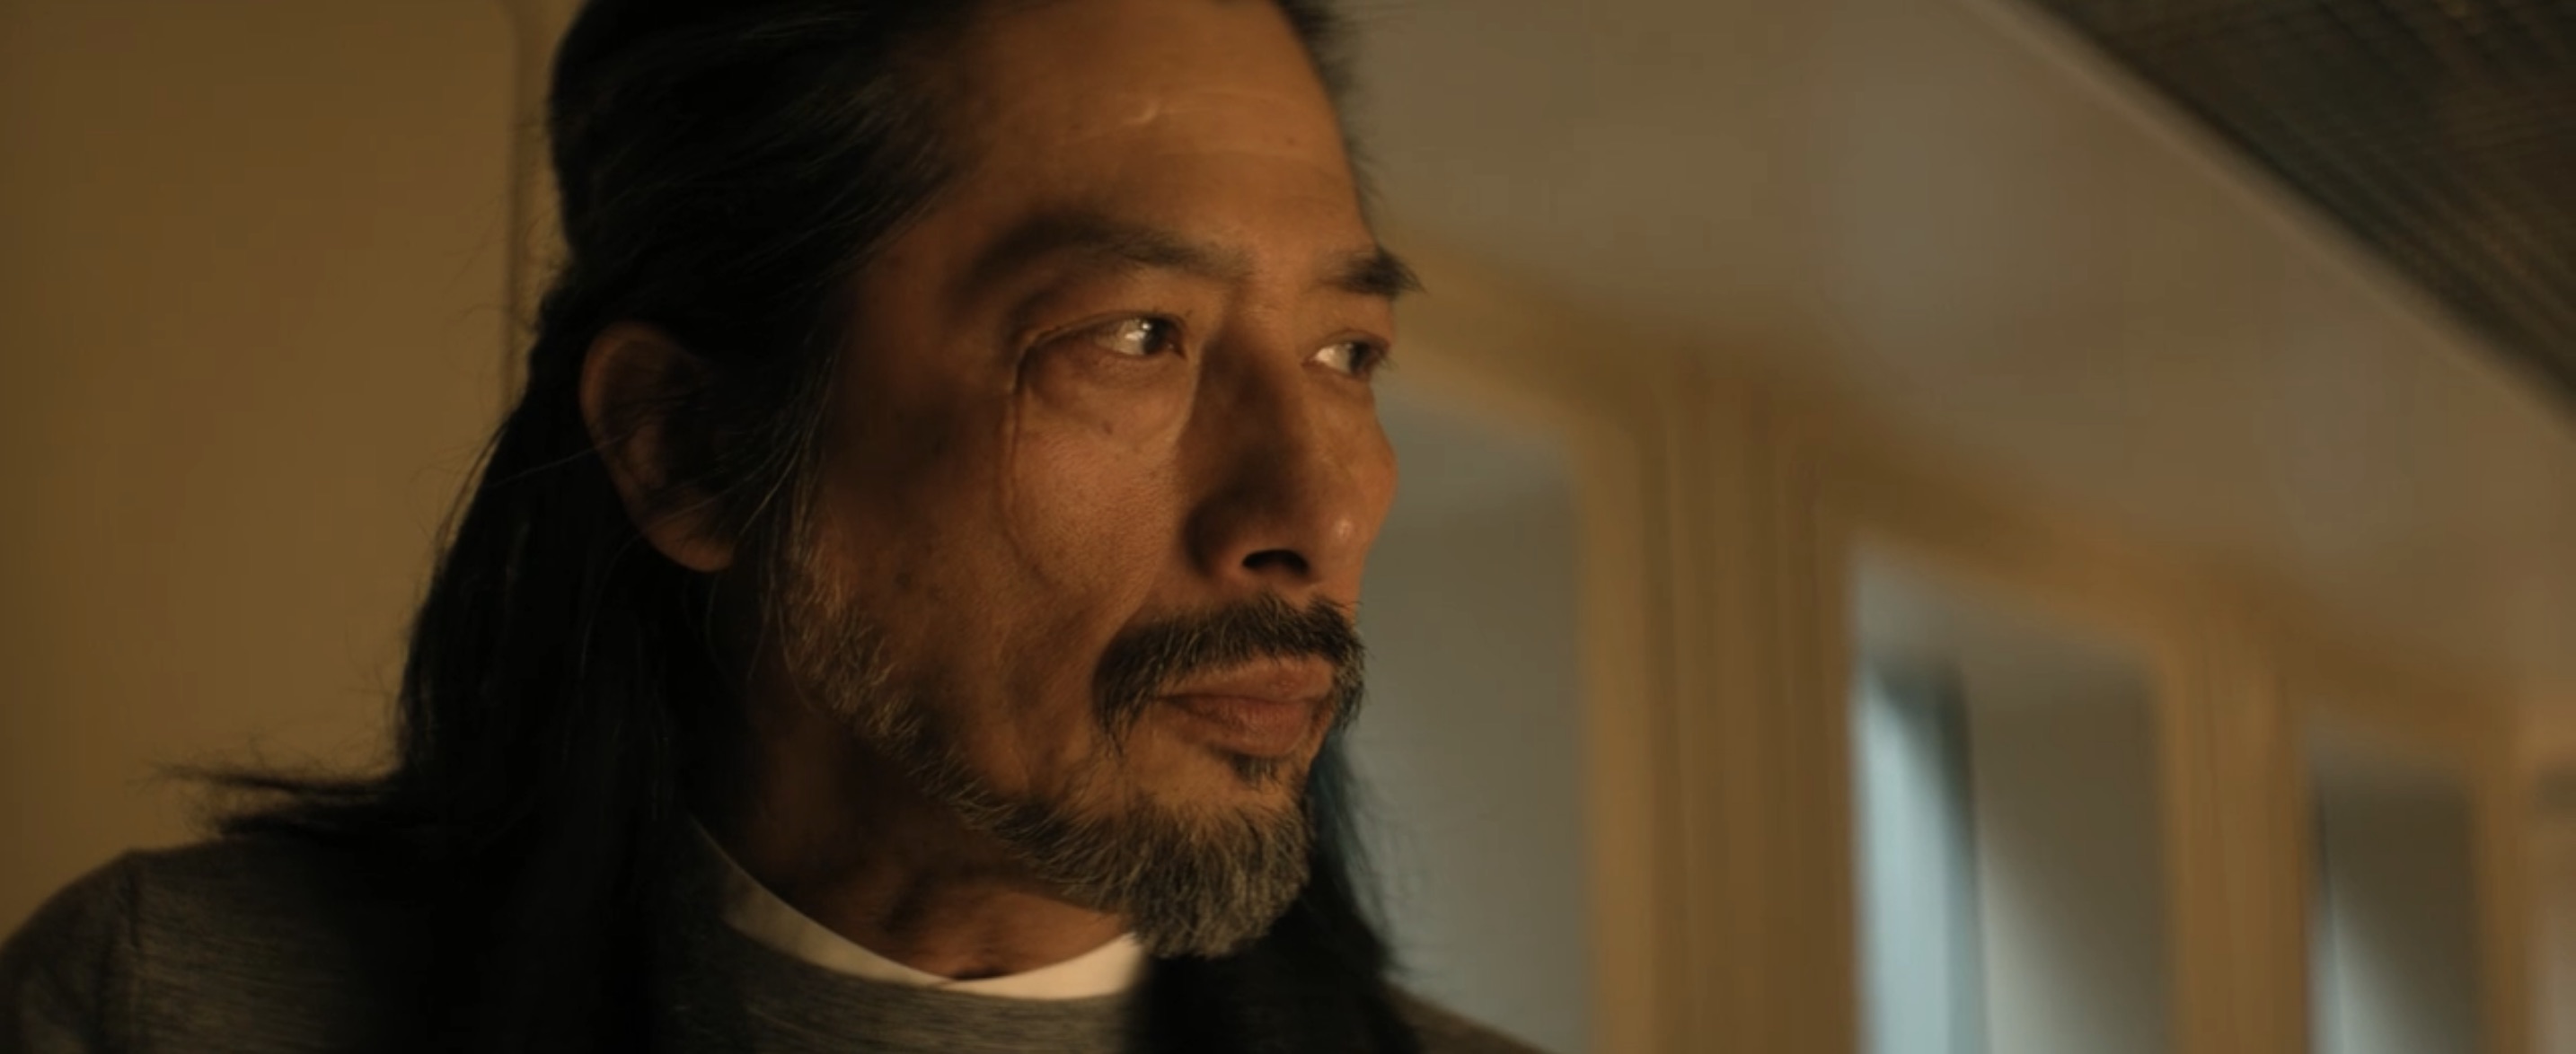 Bullet Train Cast - Hiroyuki Sanada as The Elder